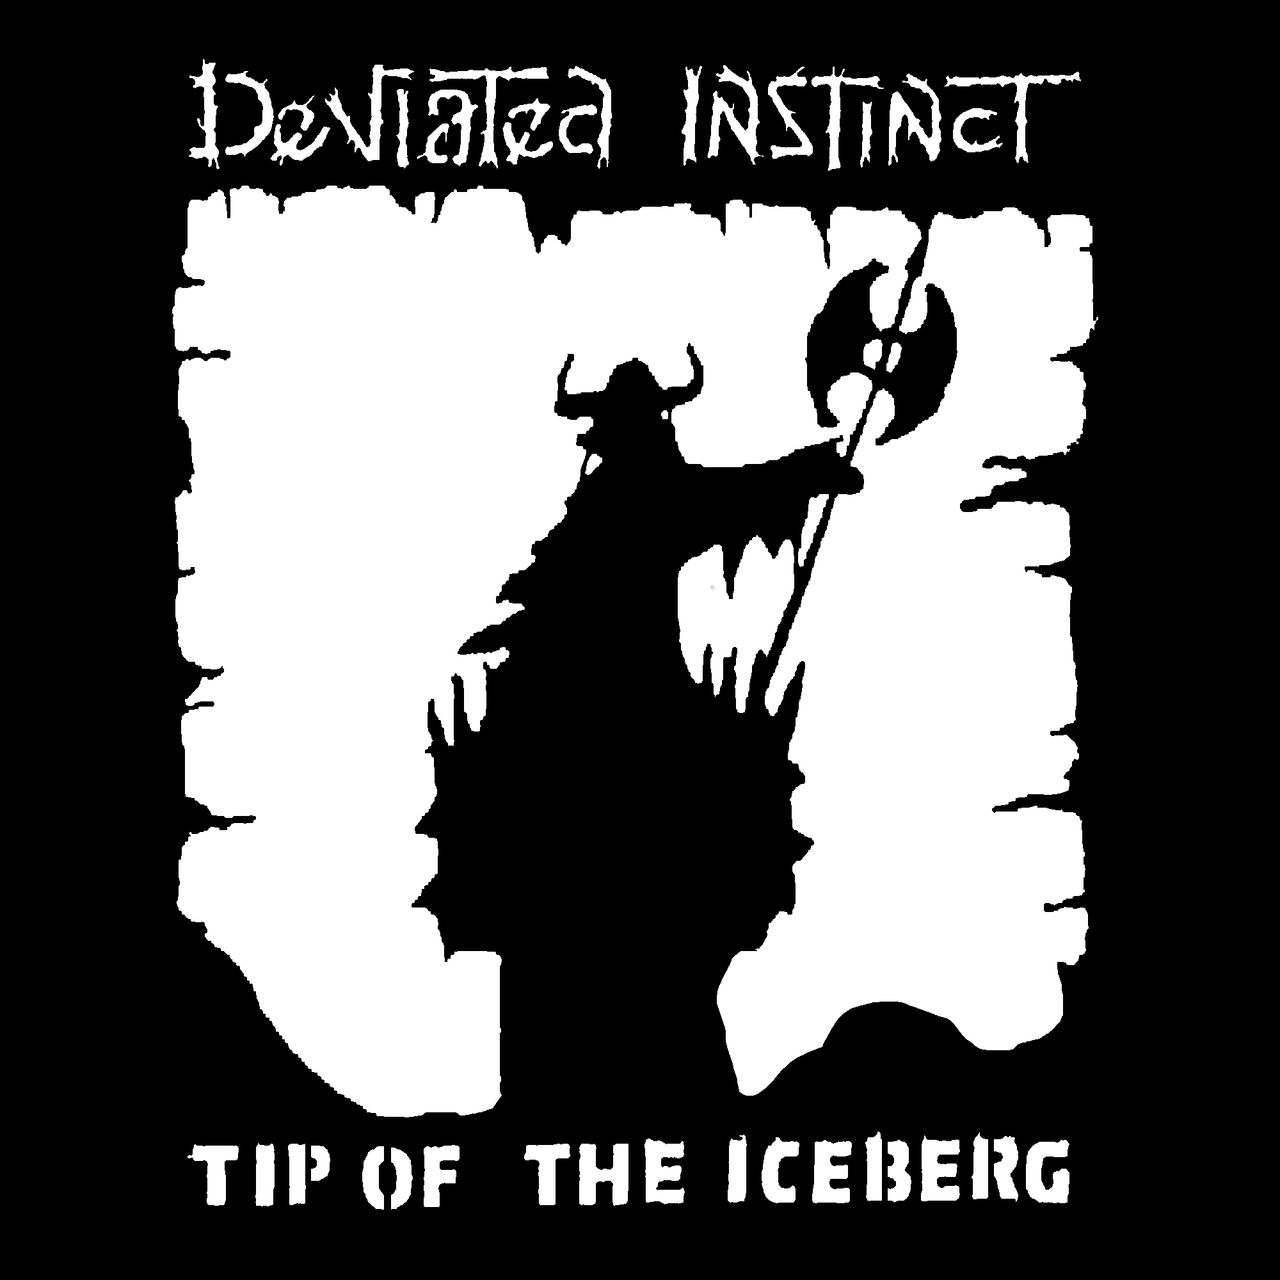 Deviated Instinct - Tip of the Iceberg by AnarchoStencilism on